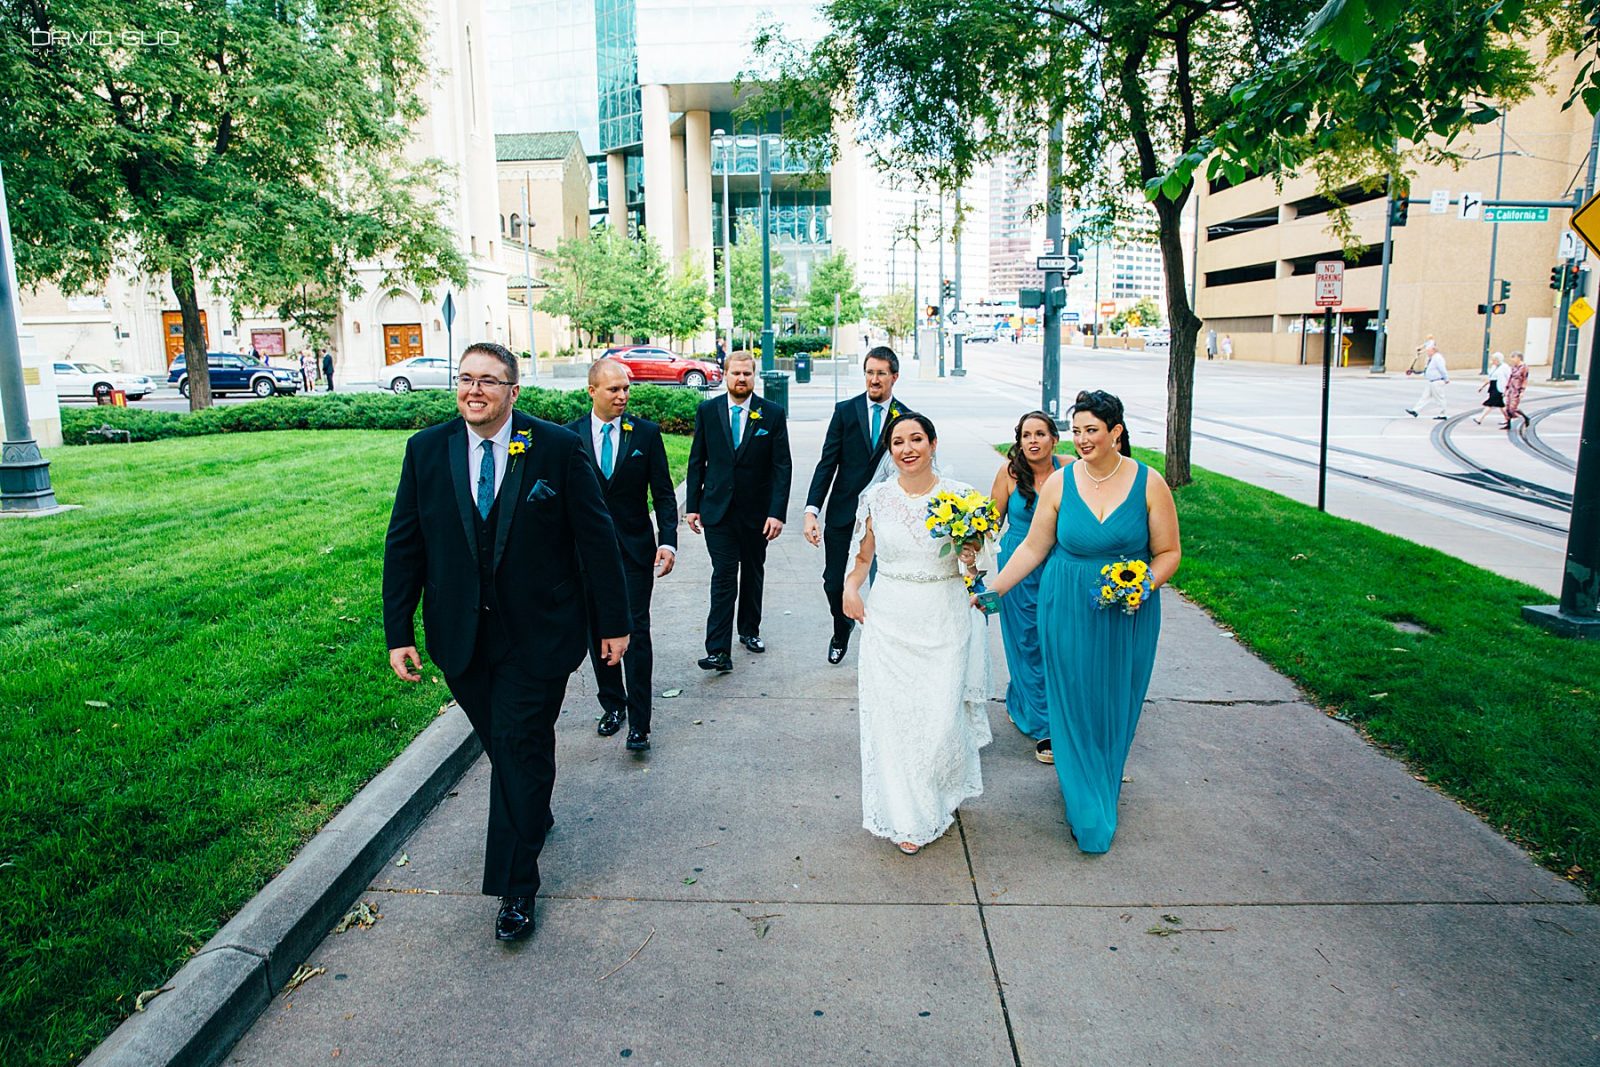 downtown denver wedding party walking